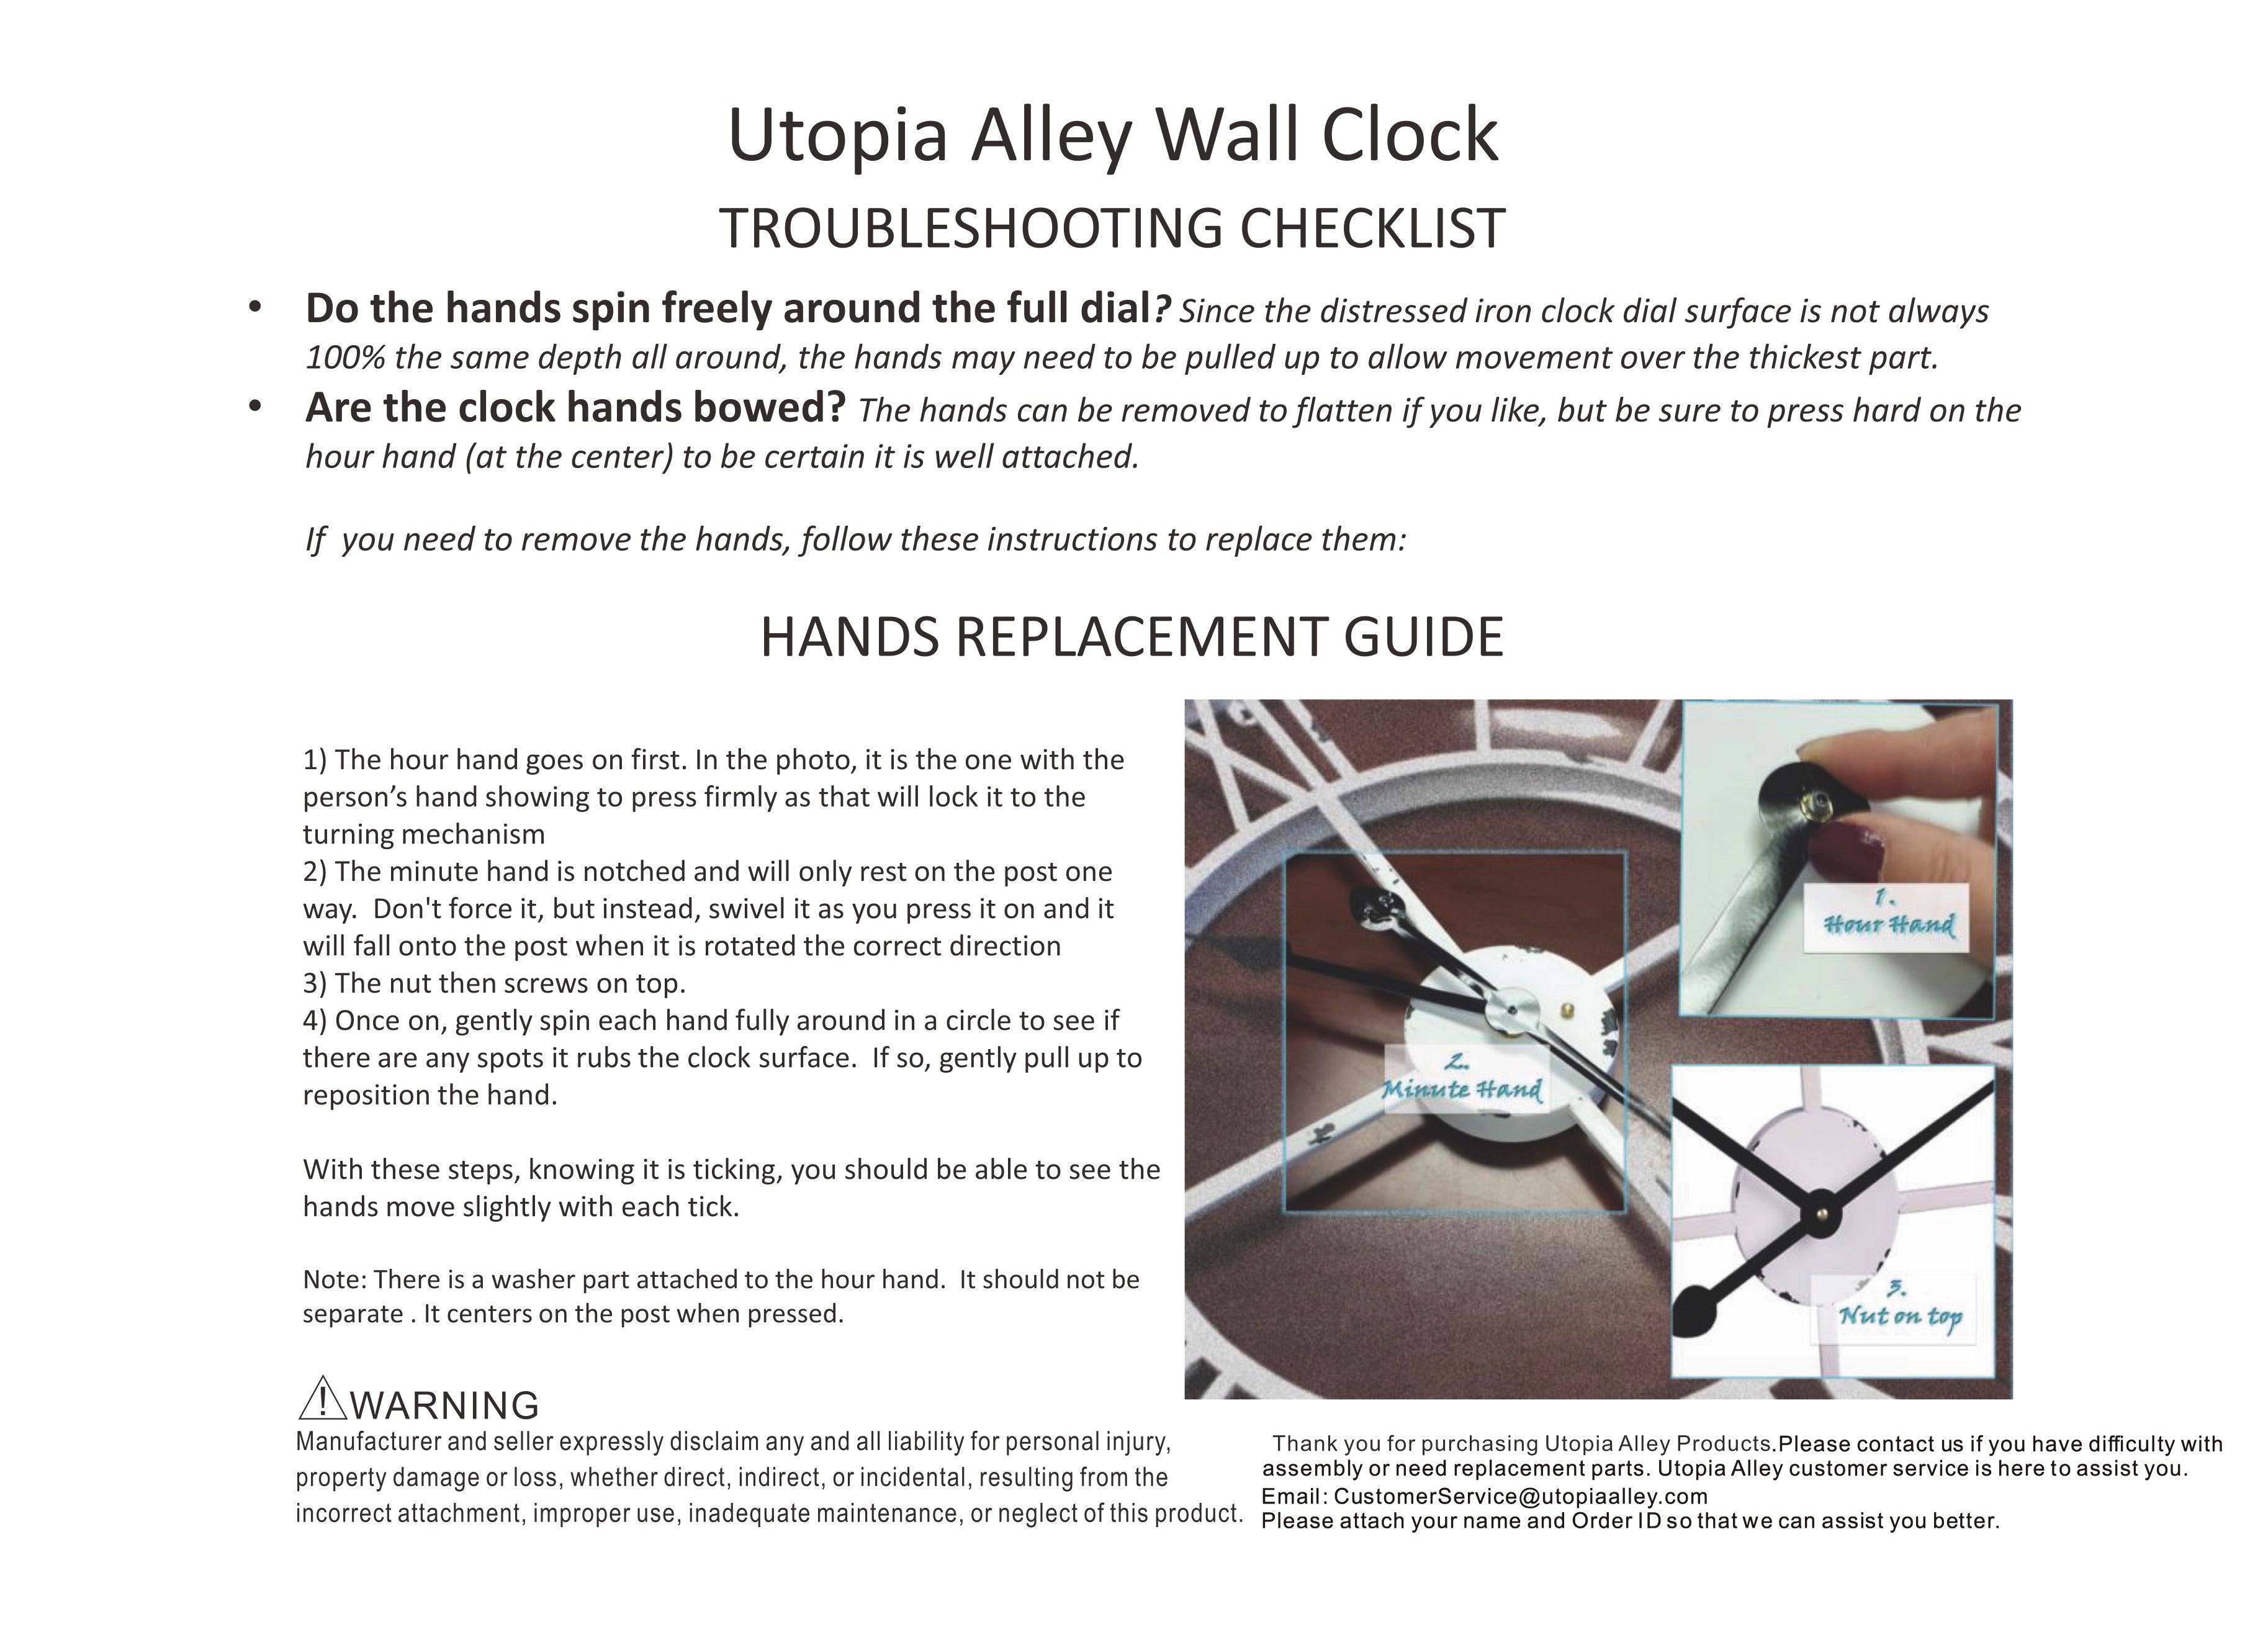 Loft97 CL40GY Manhattan Industrial Wall Clock, Analog, Gray, 24